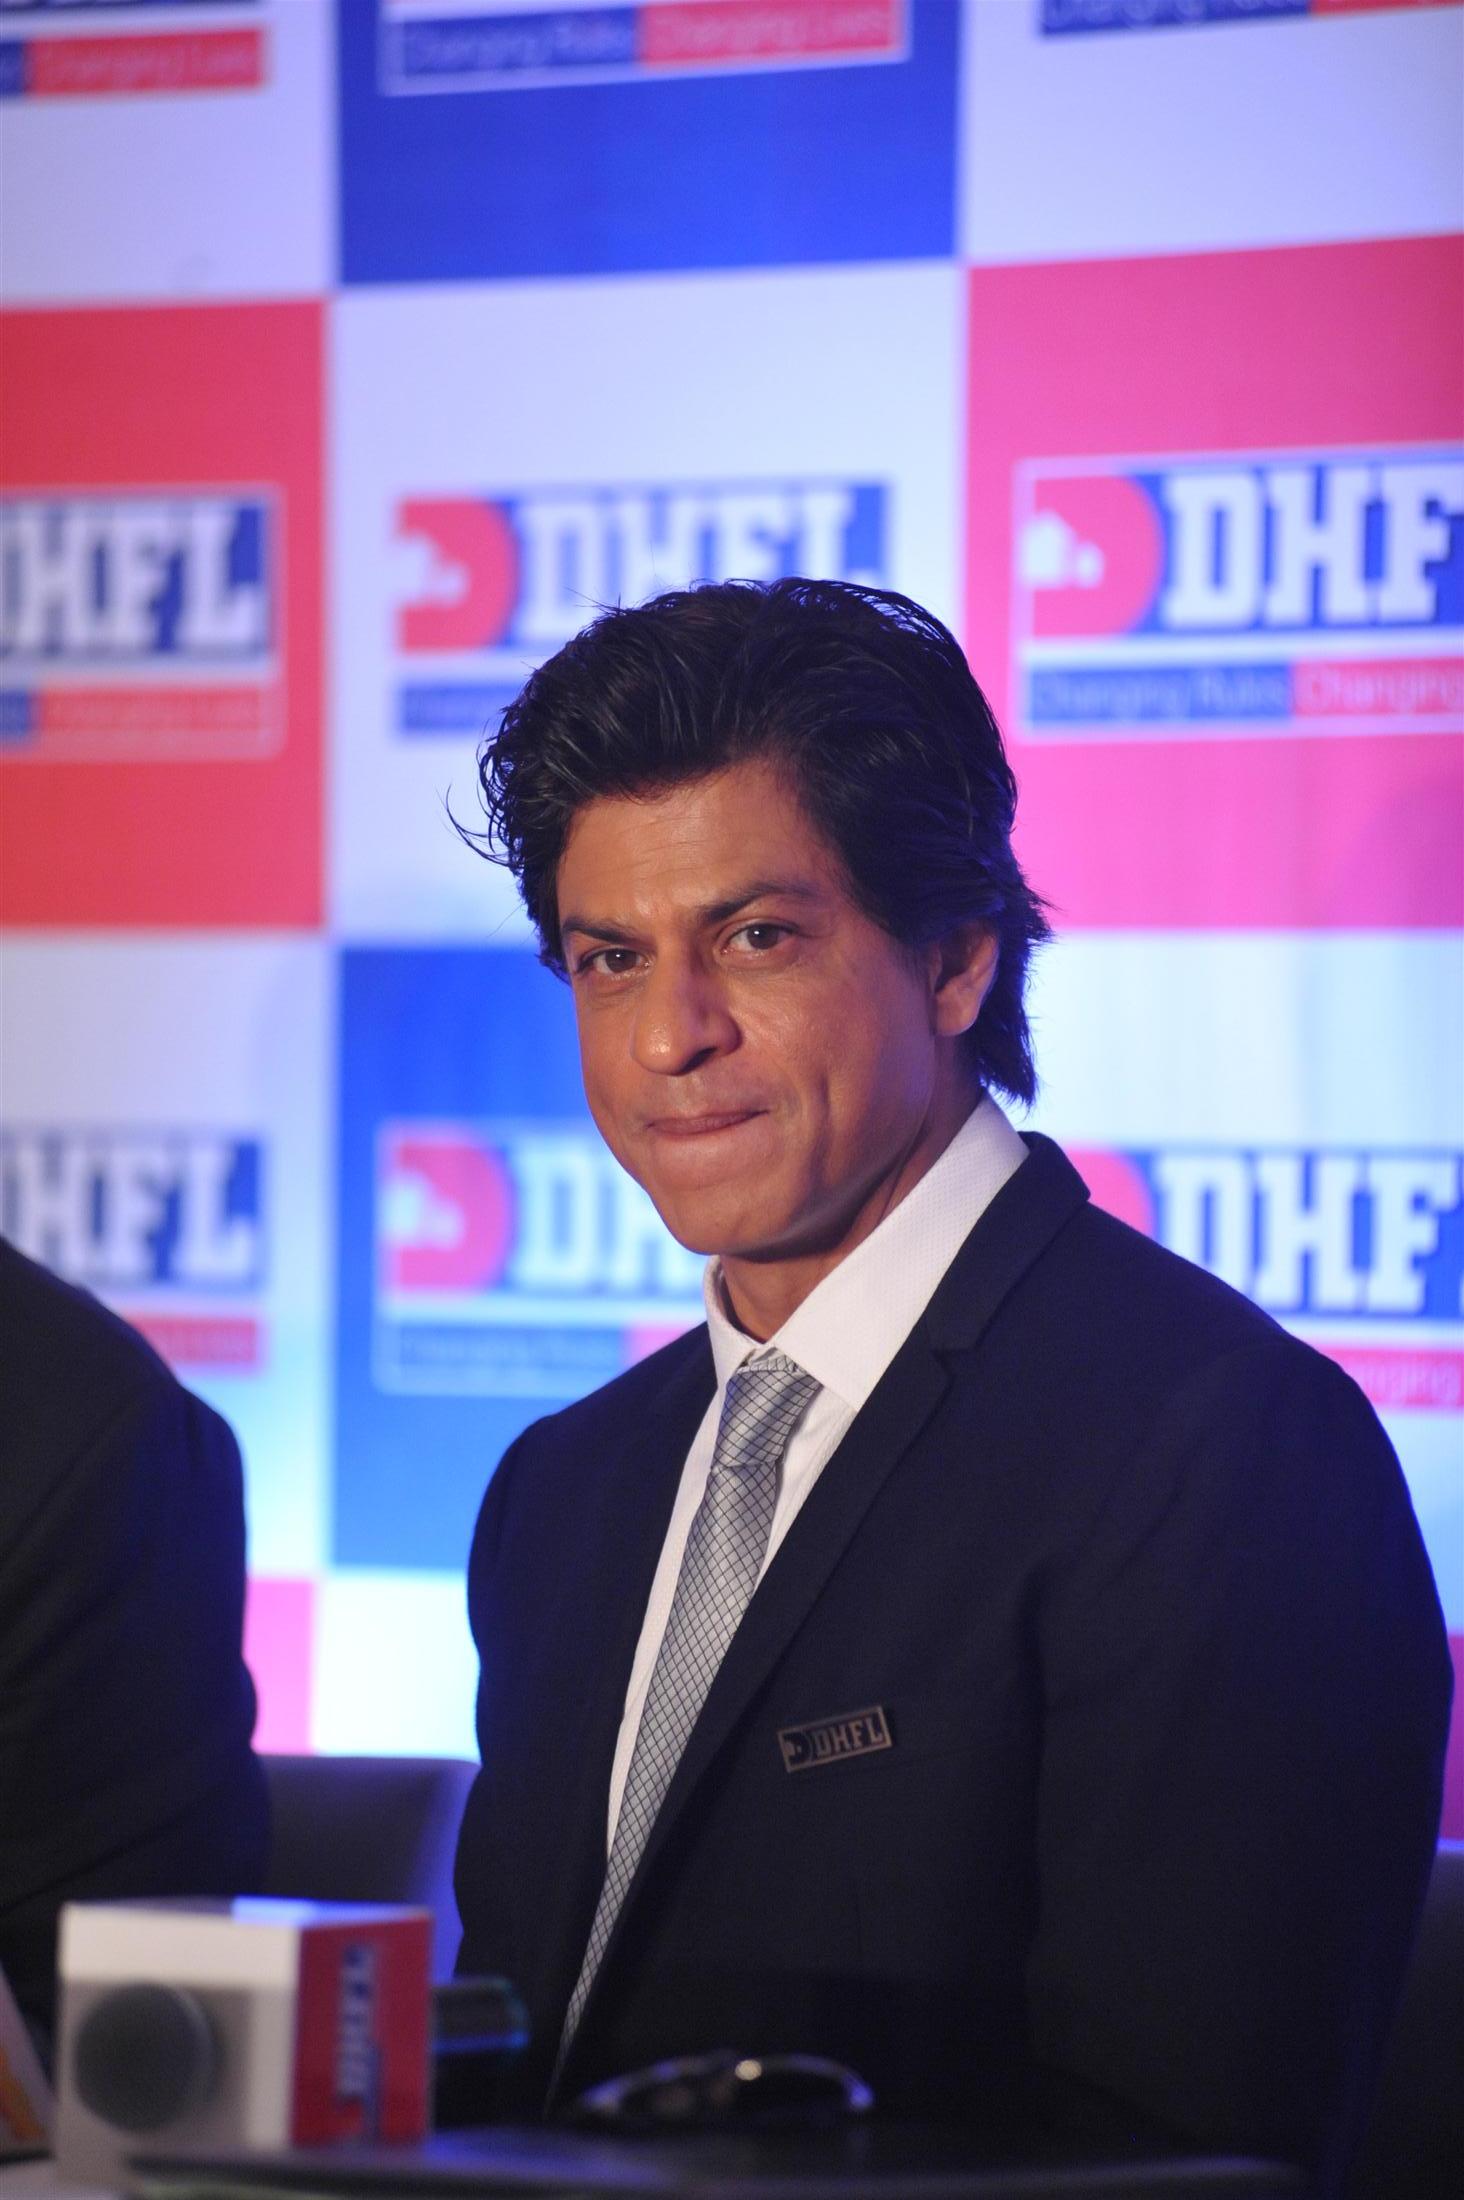 Shahrukh Khan Signed As Brand Ambassador For DHFL